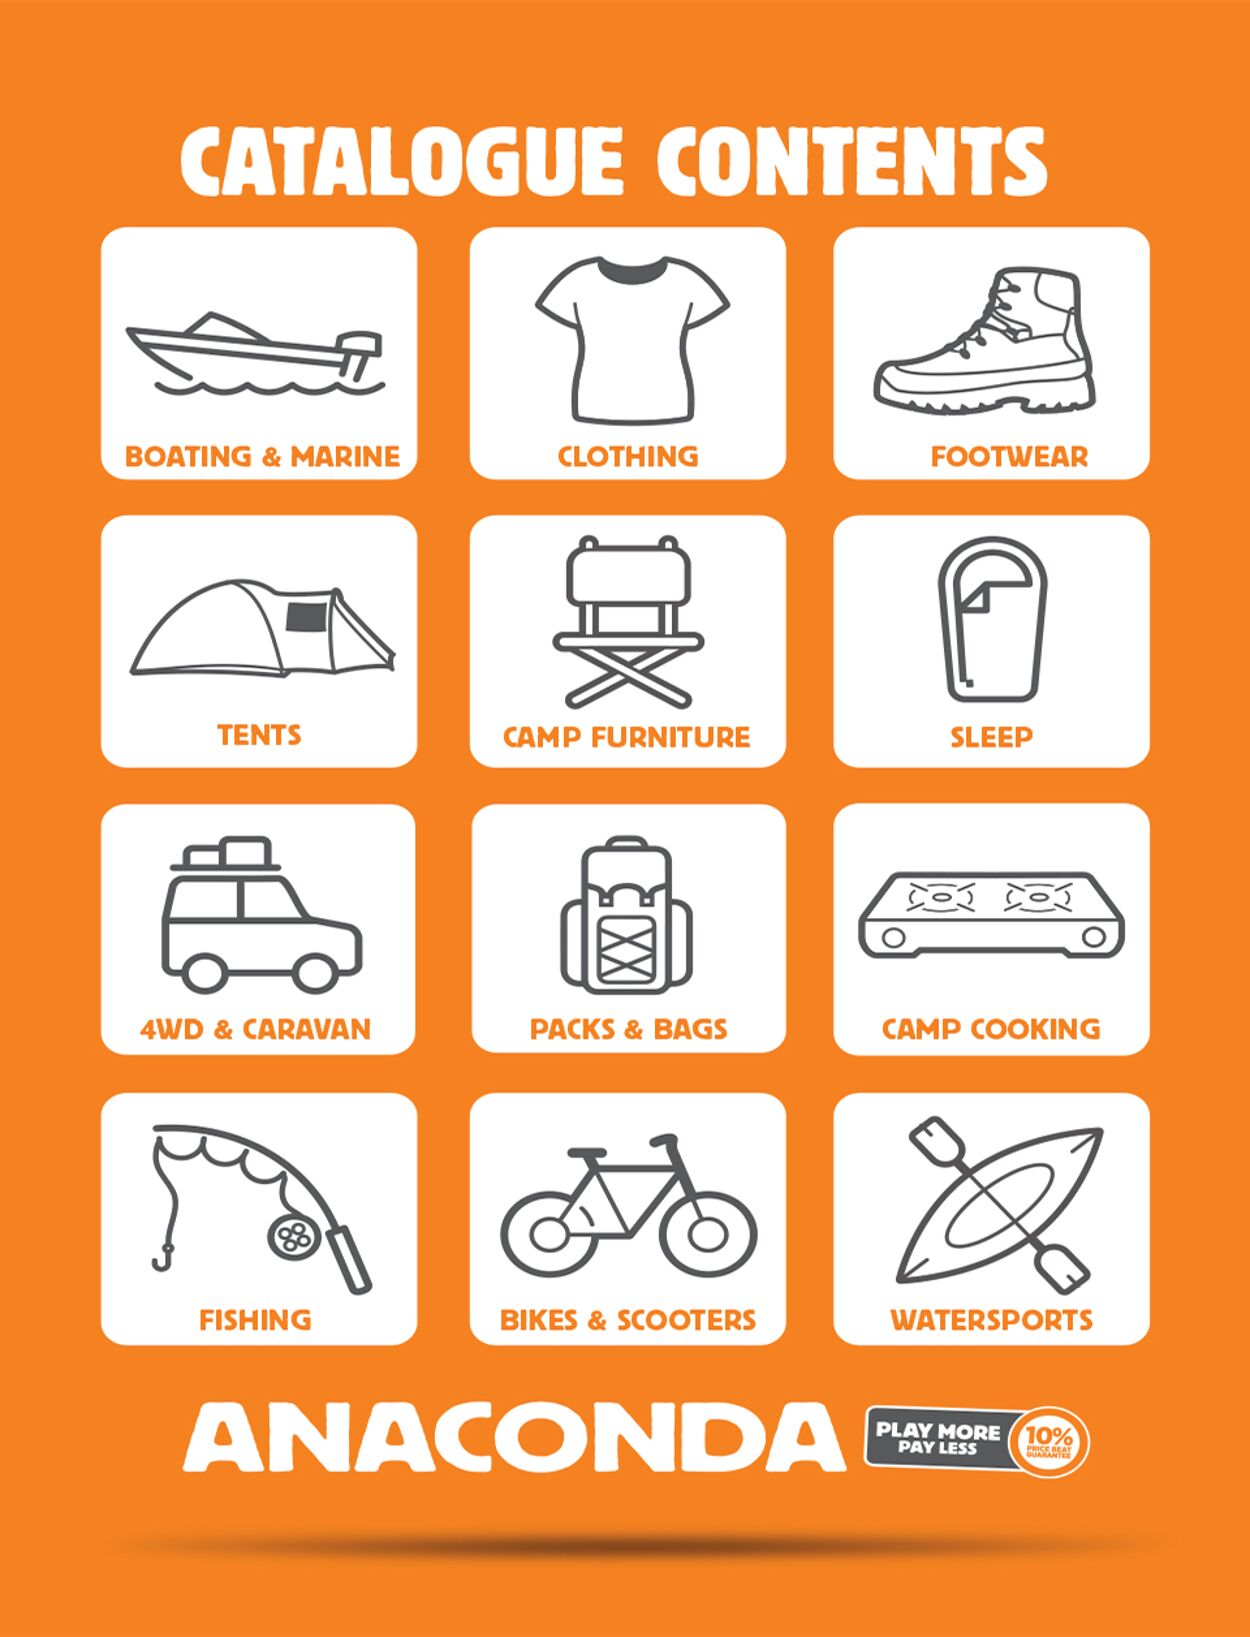 Anaconda Promotional catalogues